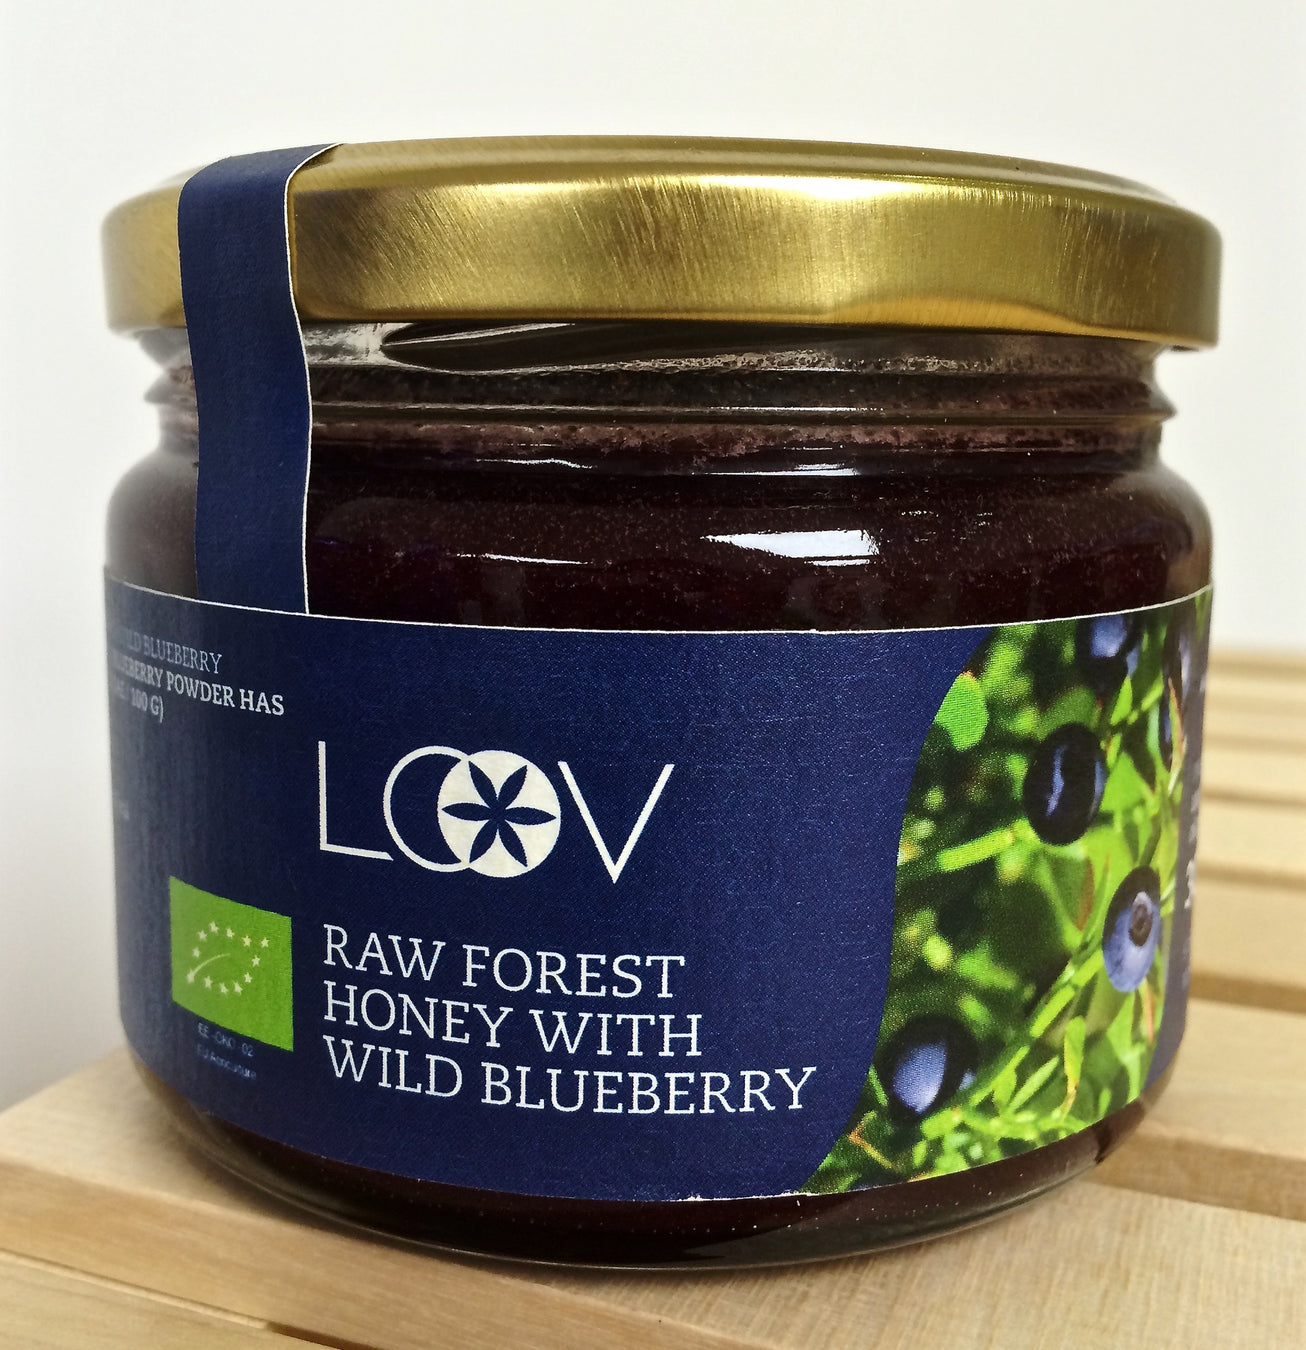 Loov 有機藍莓粉原生蜂蜜 Organic Raw Forest Honey With Wild Blueberry (300g)